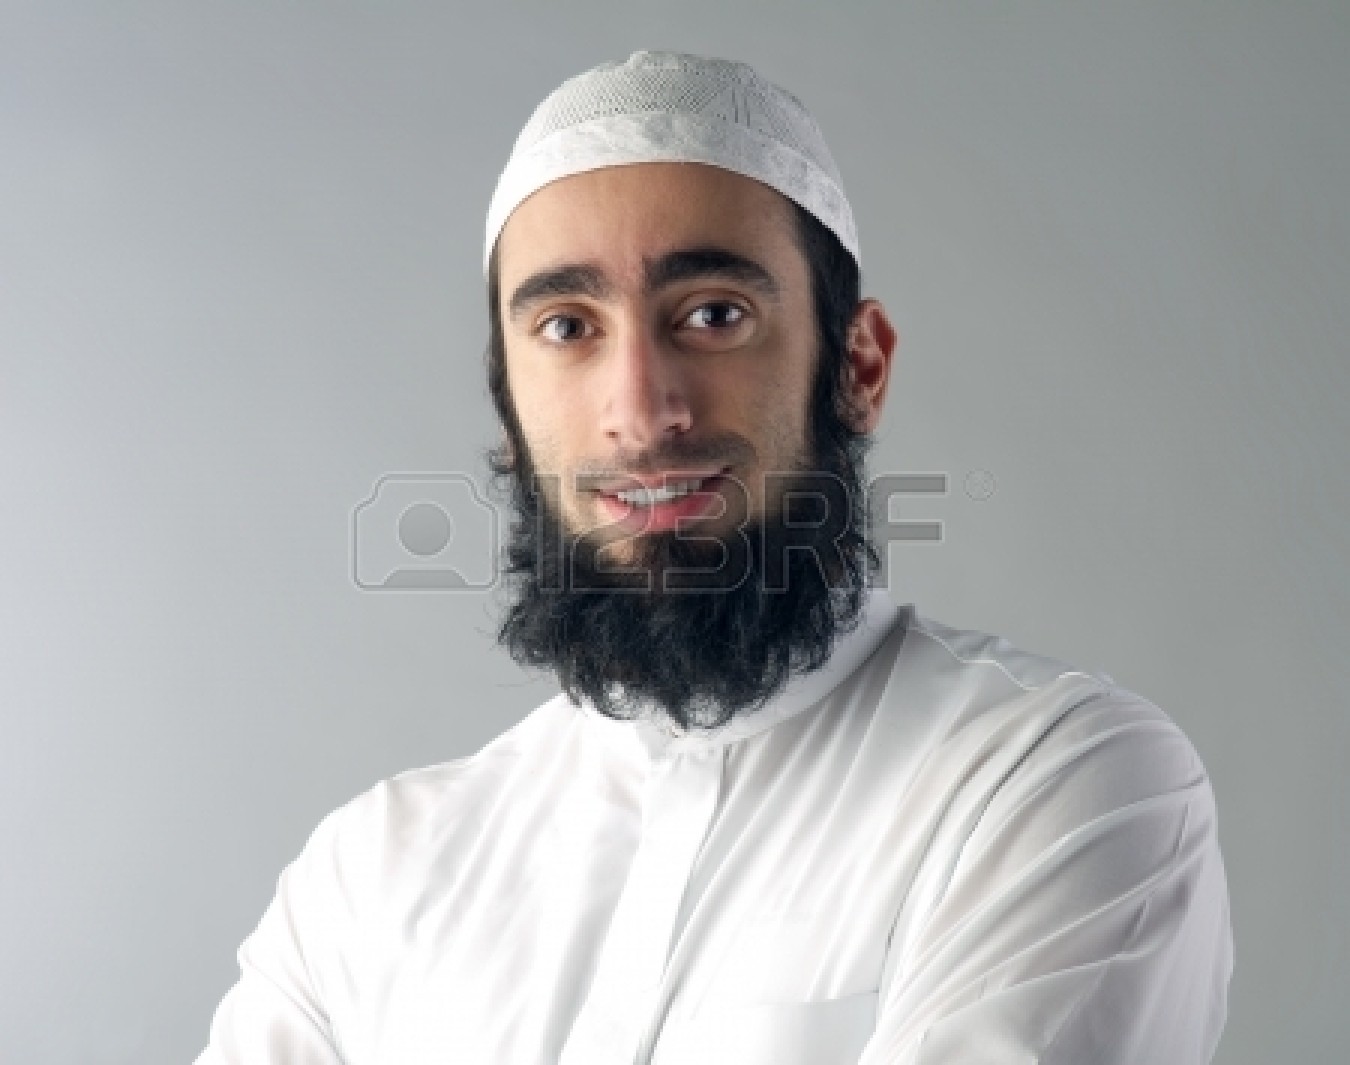 25015532-arabic-muslim-man-with-beard-portrait.jpg